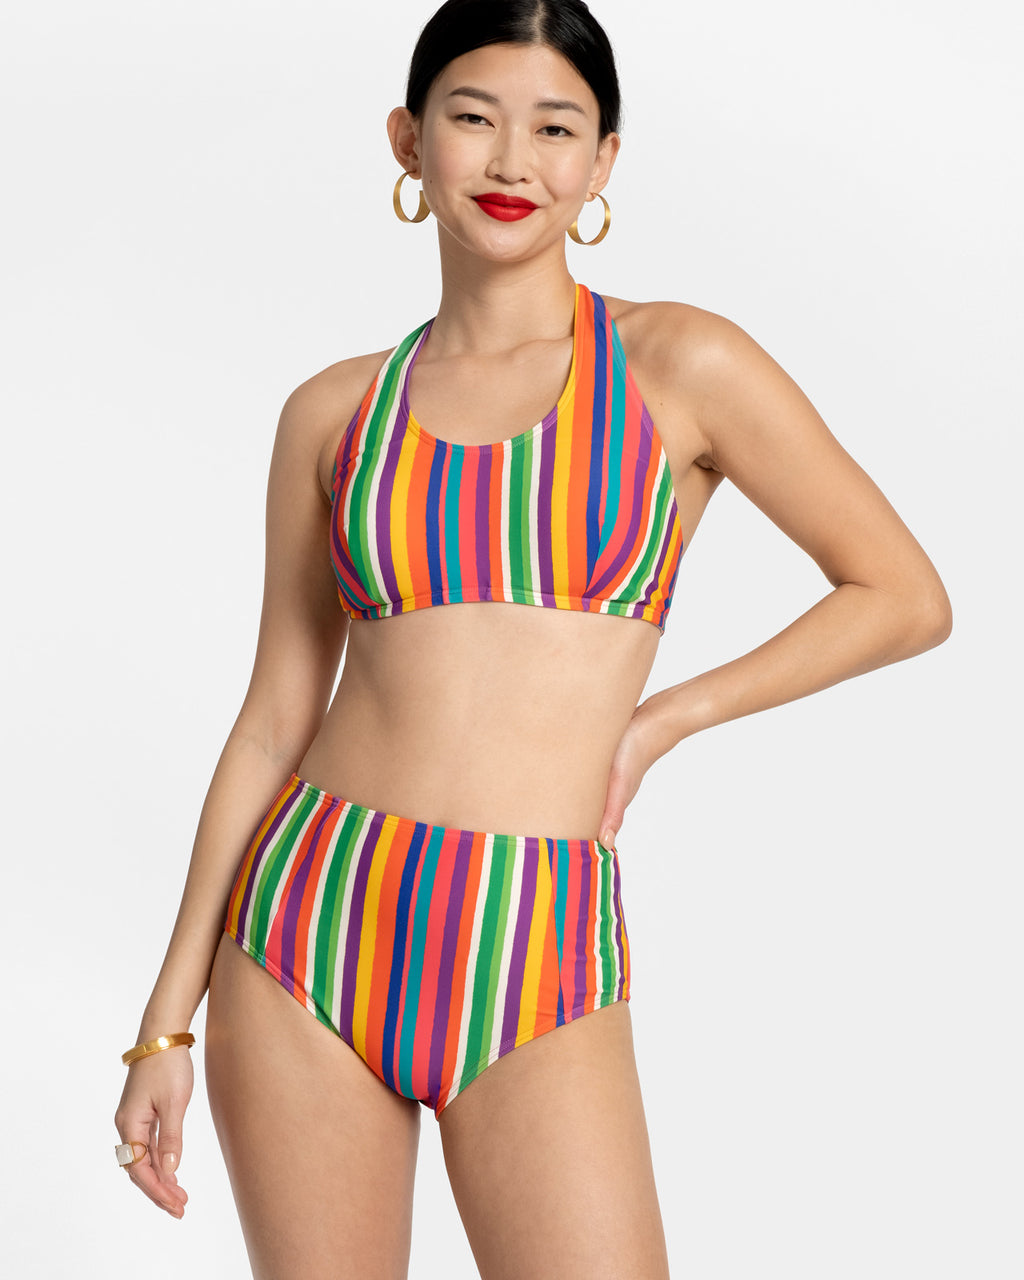 fvwitlyh Bikini Sets for Womens Swimsuit Tops Medium Swimming